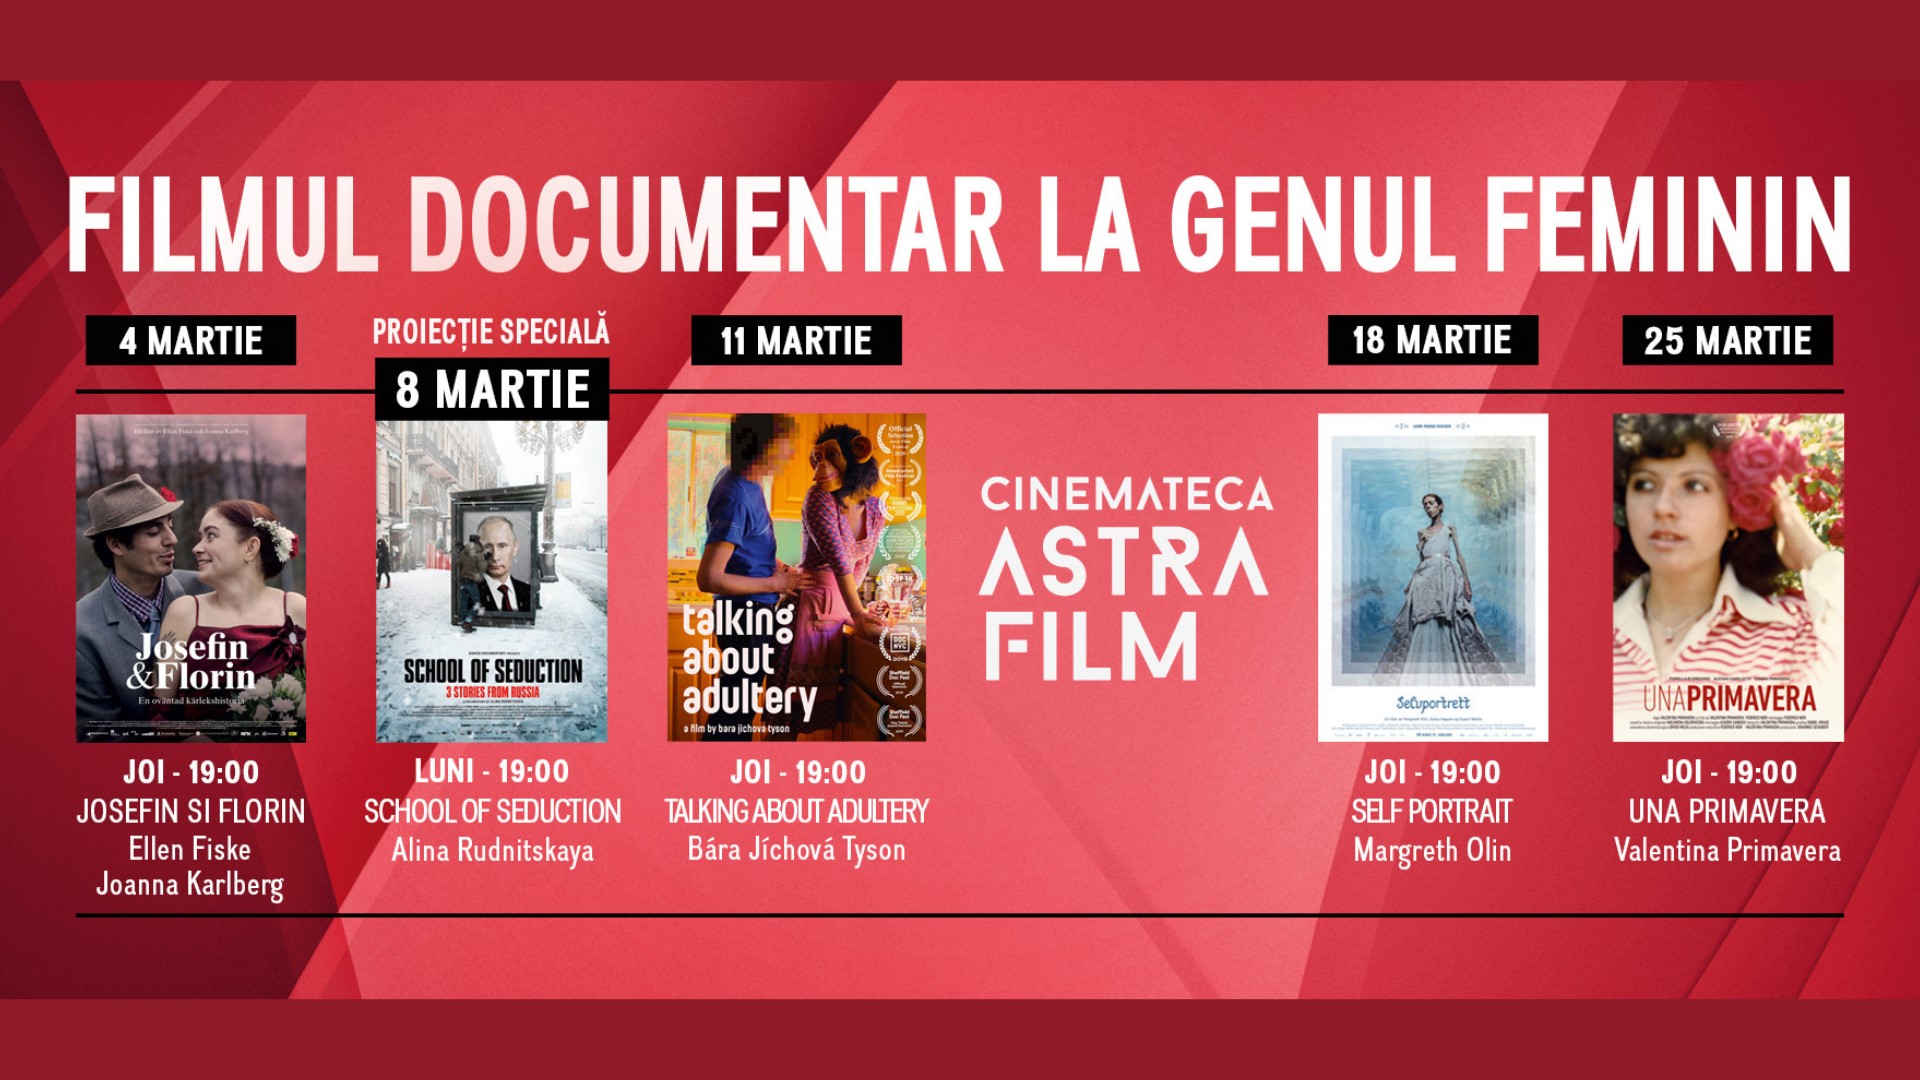 Cinemateca Astra Film prezintă "Filmul documentar la genul feminin"